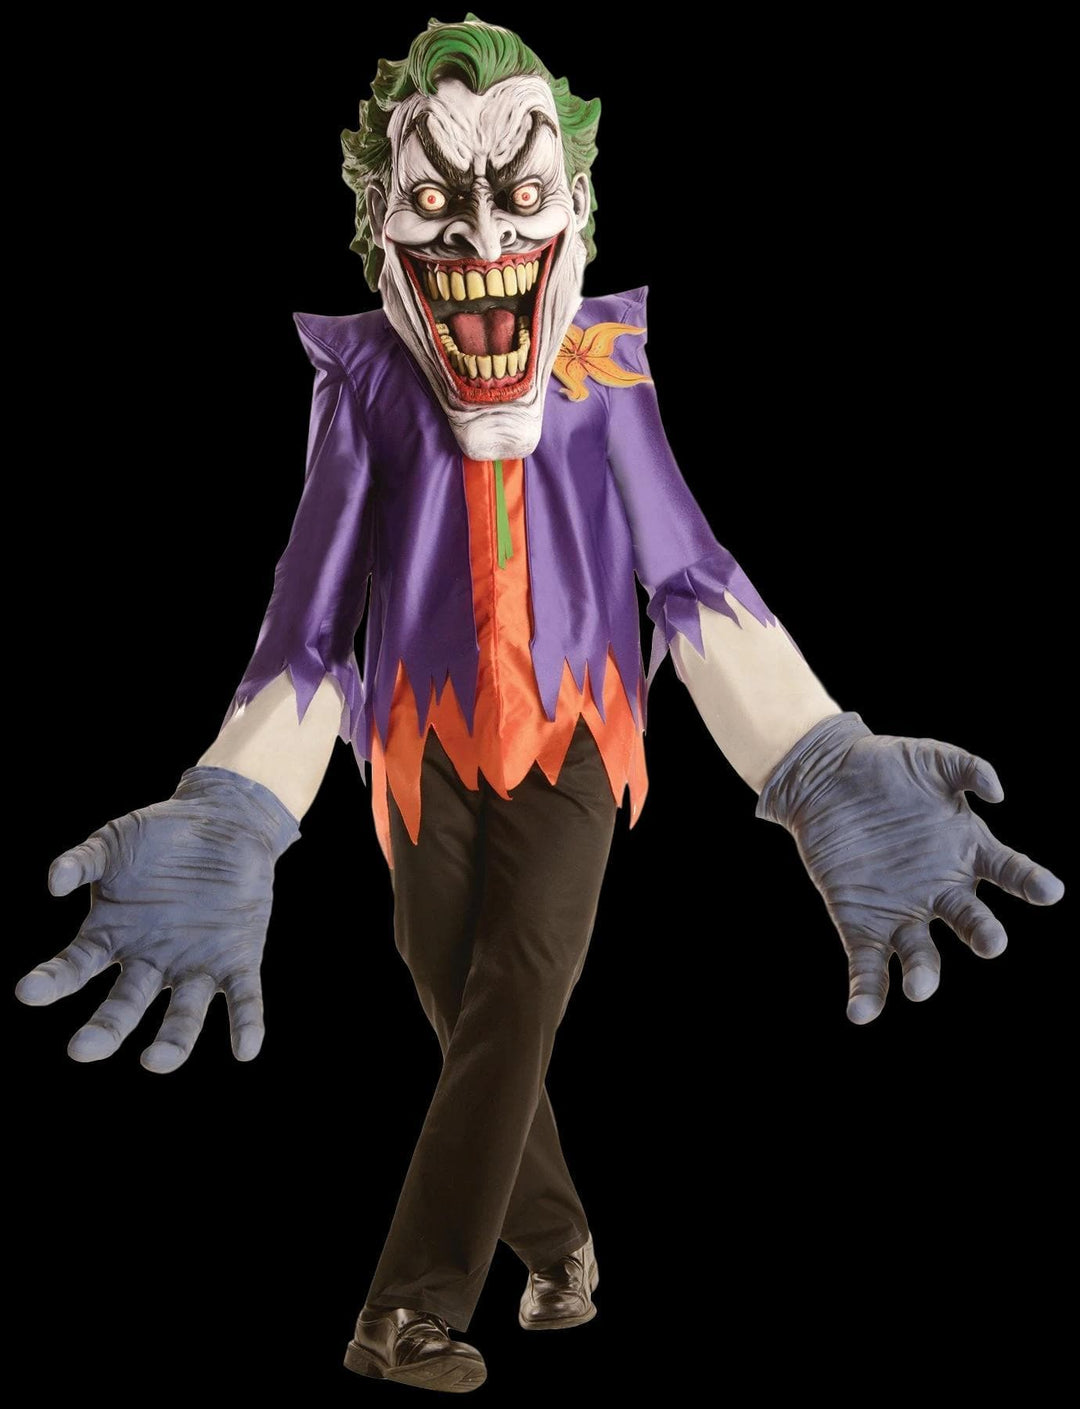 "Creature Reacher - The Joker" Movie Halloween Costume